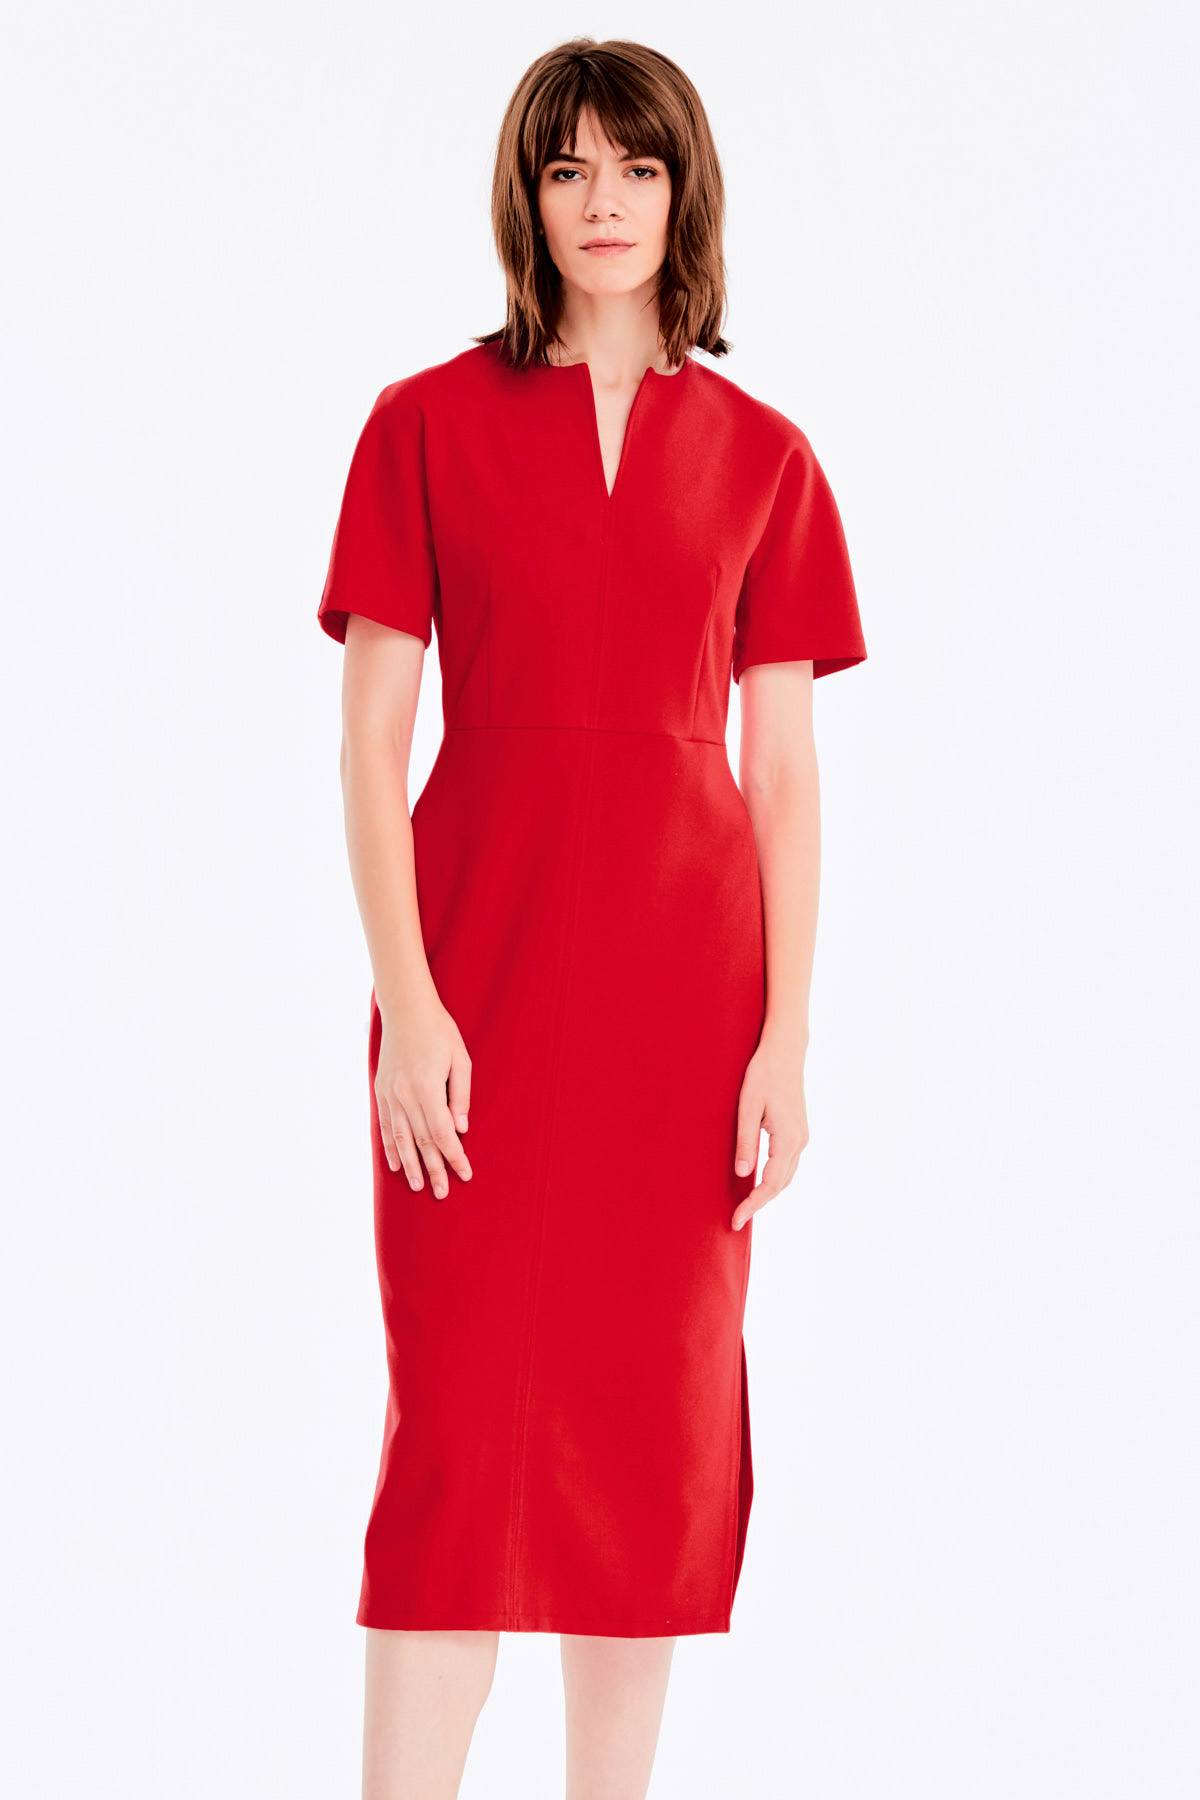 V-neck red dress with slits  , photo 2